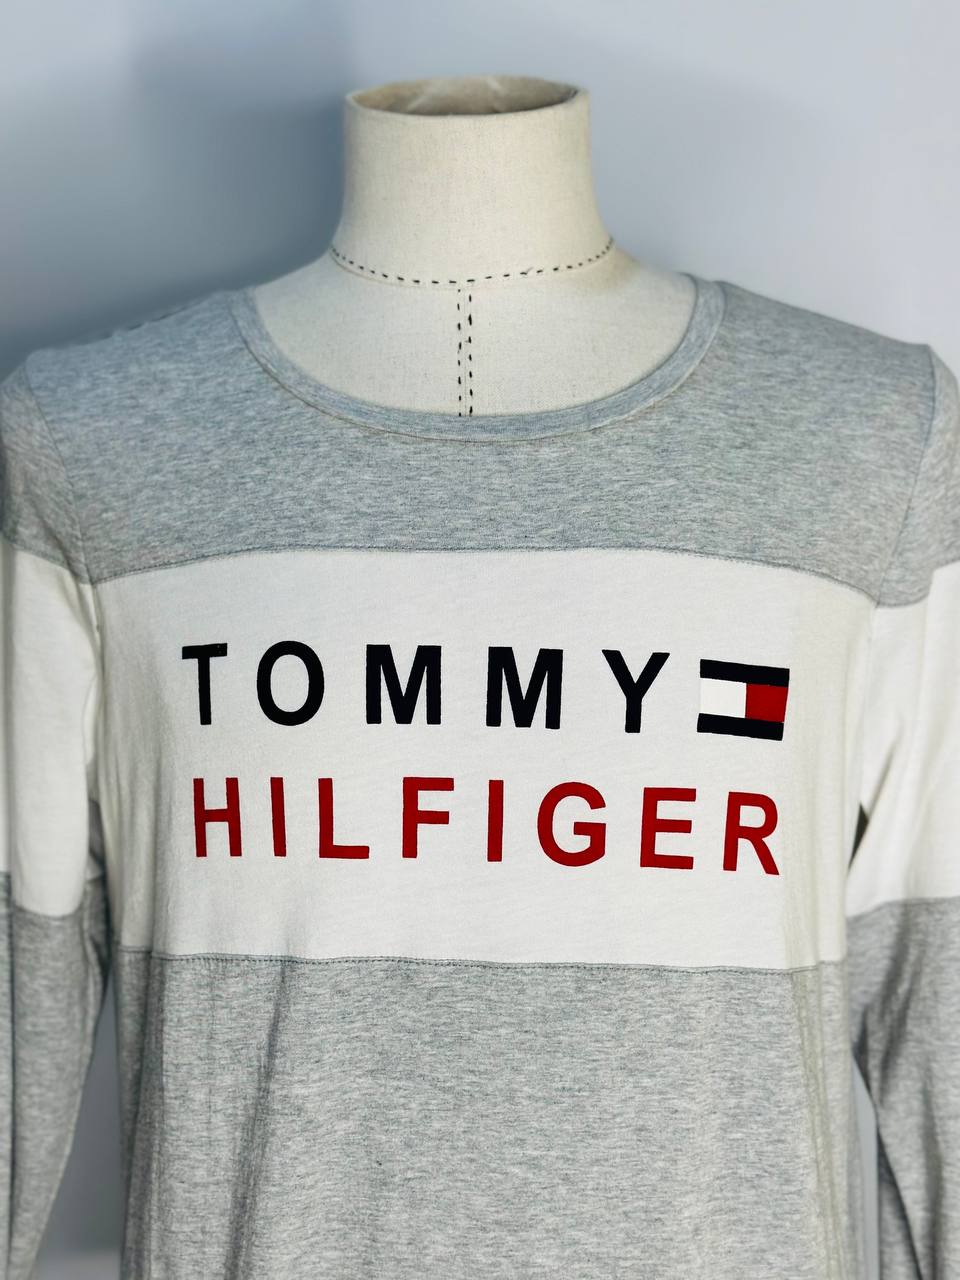 Tommy Hilfiger long sleeve shirt